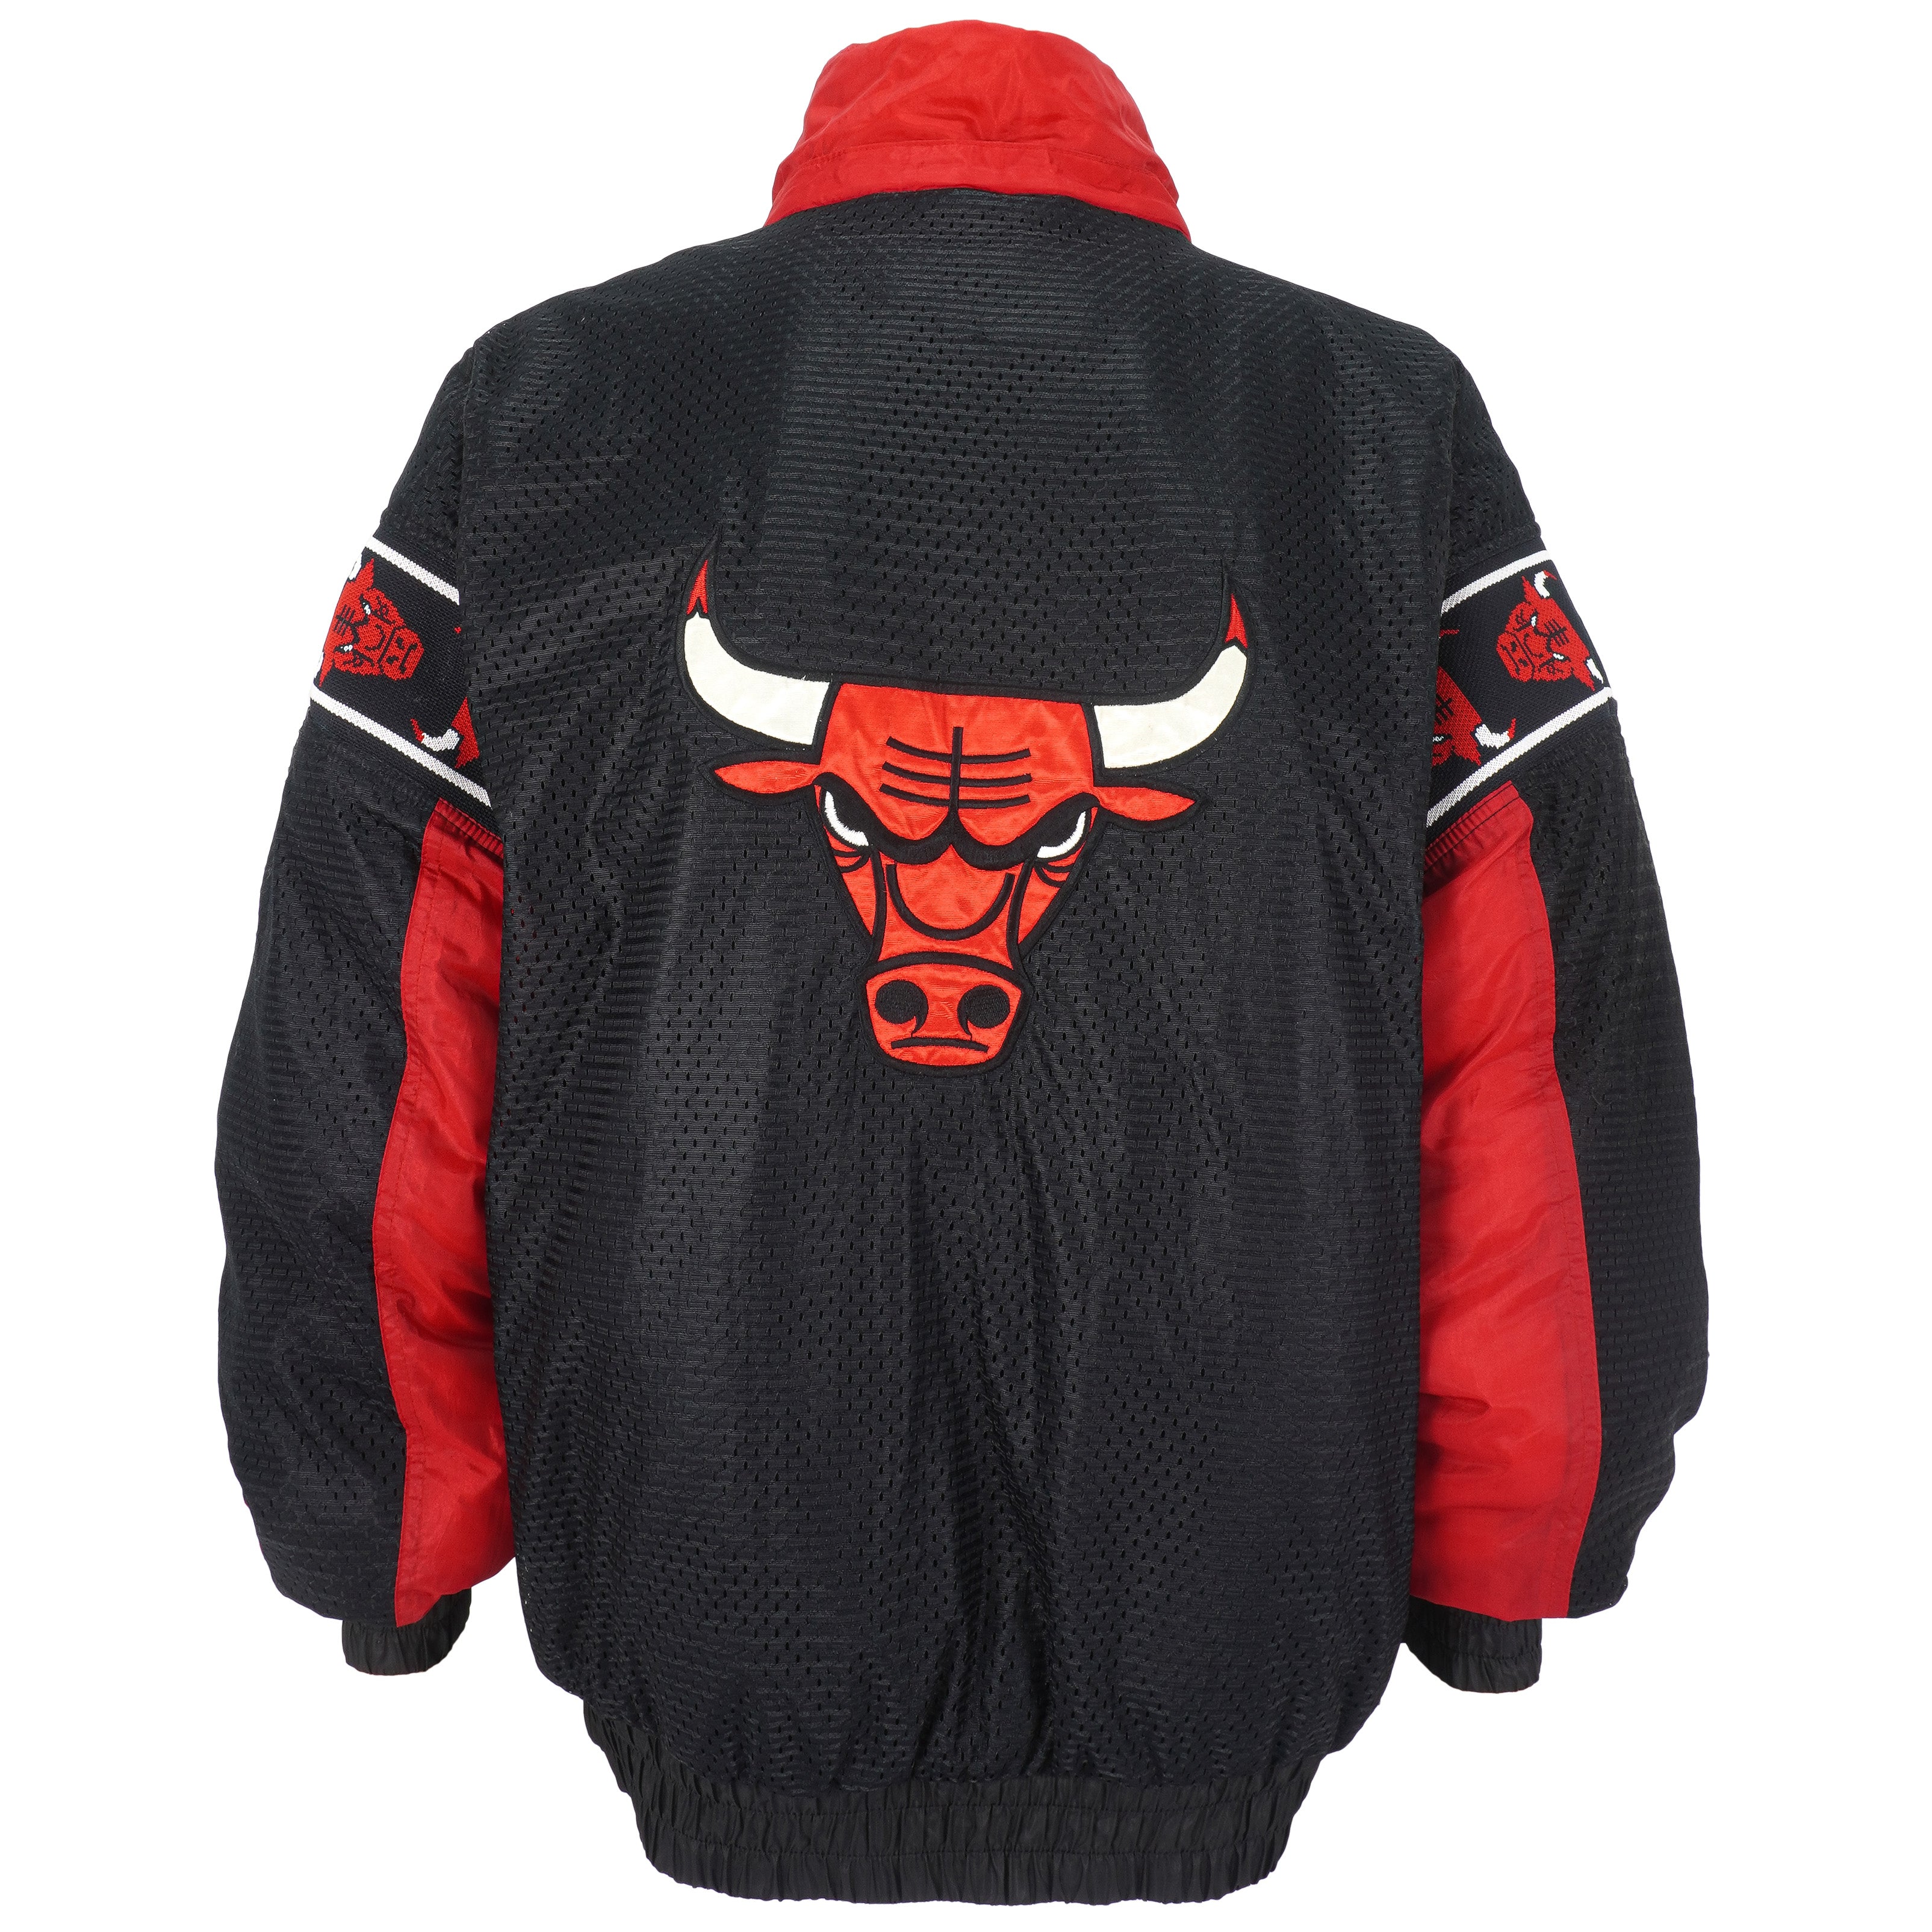 Vintage Chicago Bulls winter Jacket NBA Basketball Pro Player Black mens  size XL